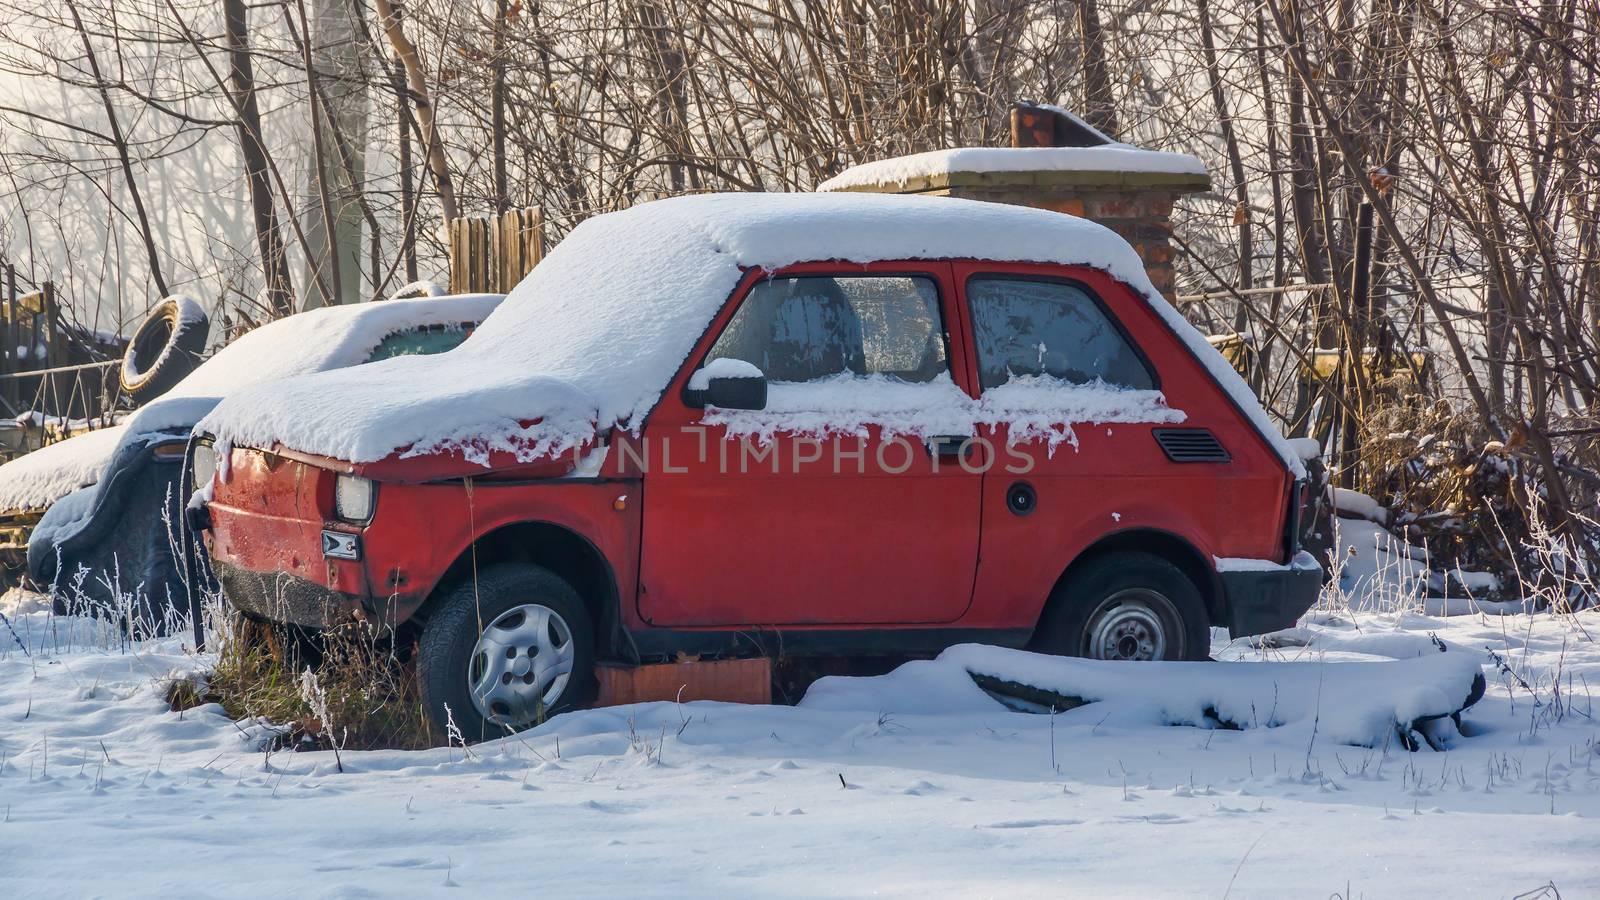 The old mini car in the garage yard, Katowice, Silesia region, Poland.